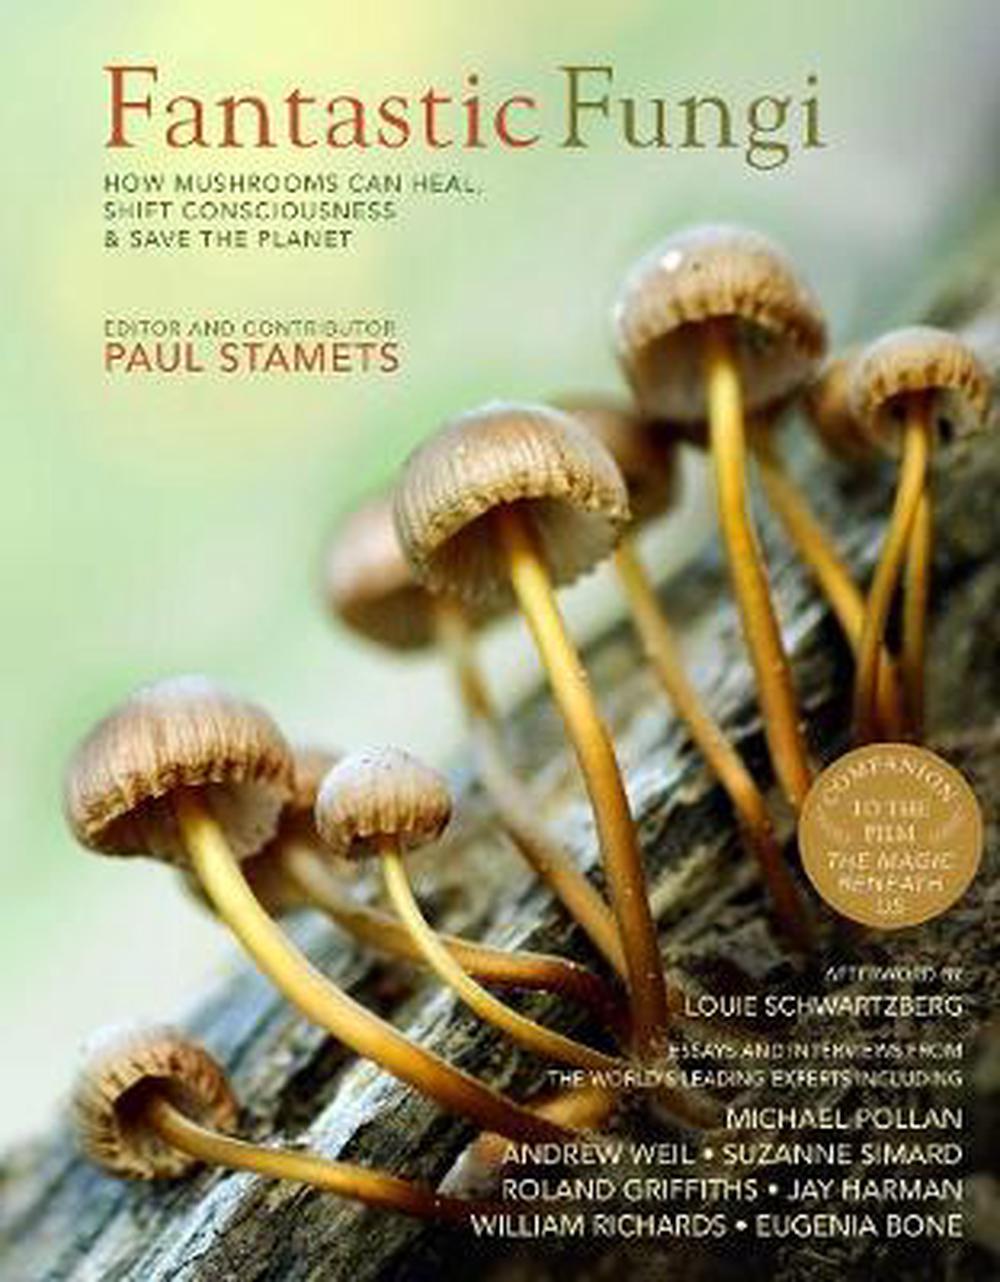 Fantastic Fungi by Louis Schwartzberg and Eugenia Bone